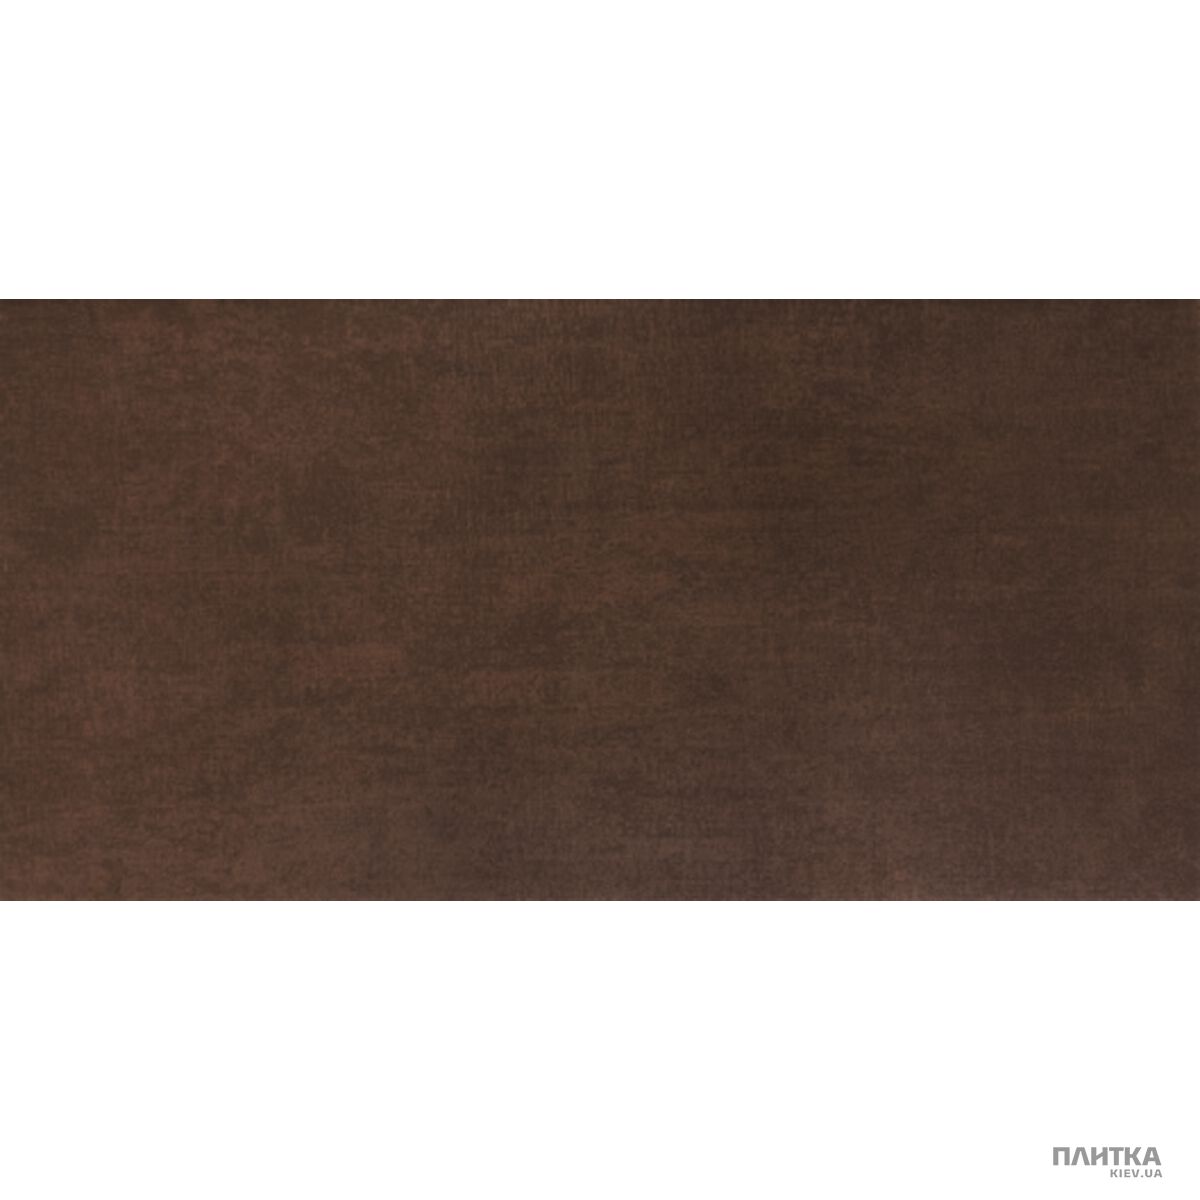 Керамогранит Lasselsberger-Rako Tahiti TAHITI DAASE518 brown коричневый